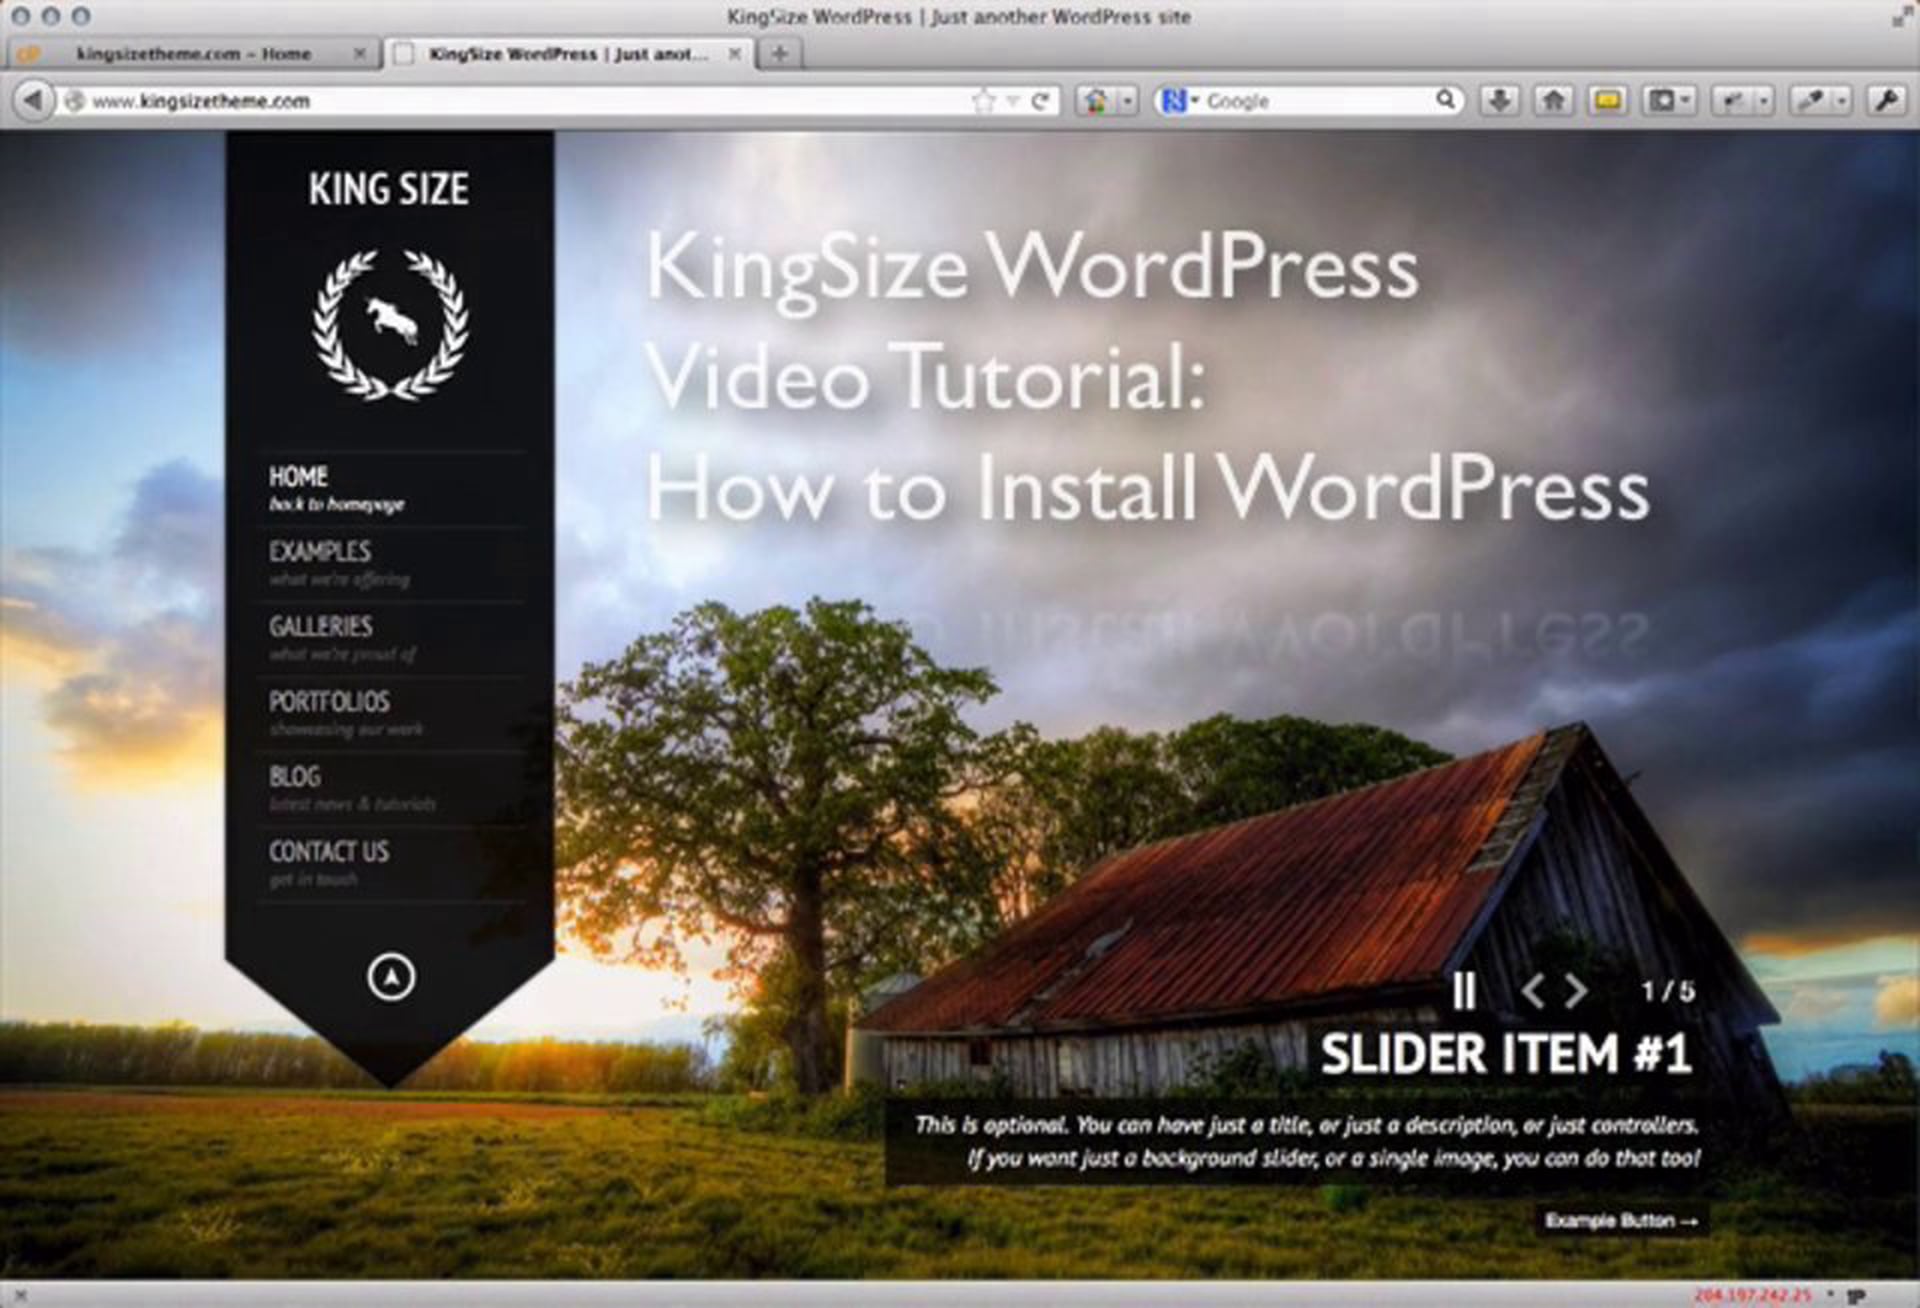 1. KingSize WordPress: Installing WordPress